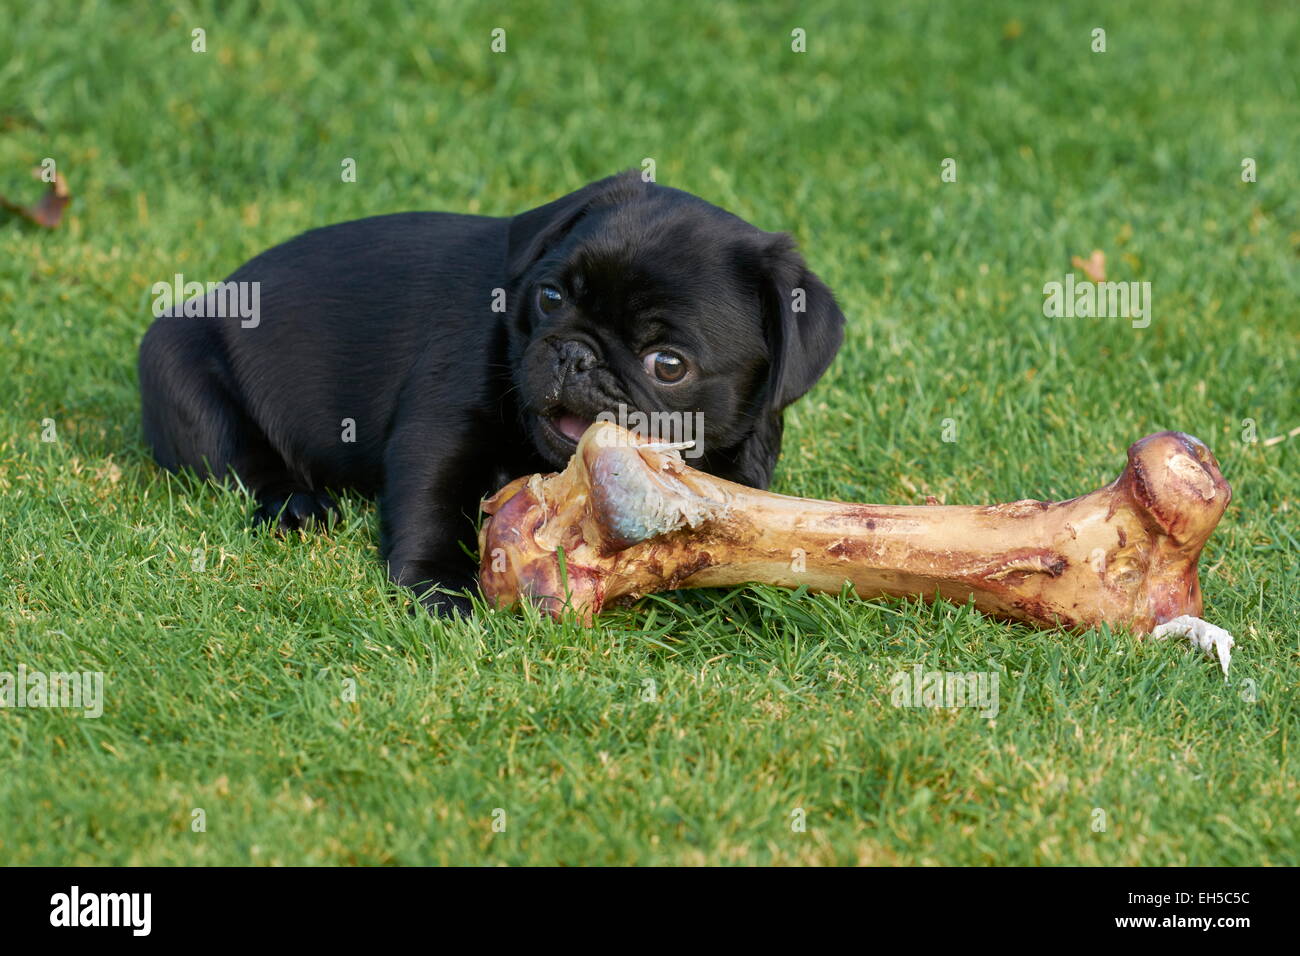 Black pug puppy enjoying eating a bone Stock Photo